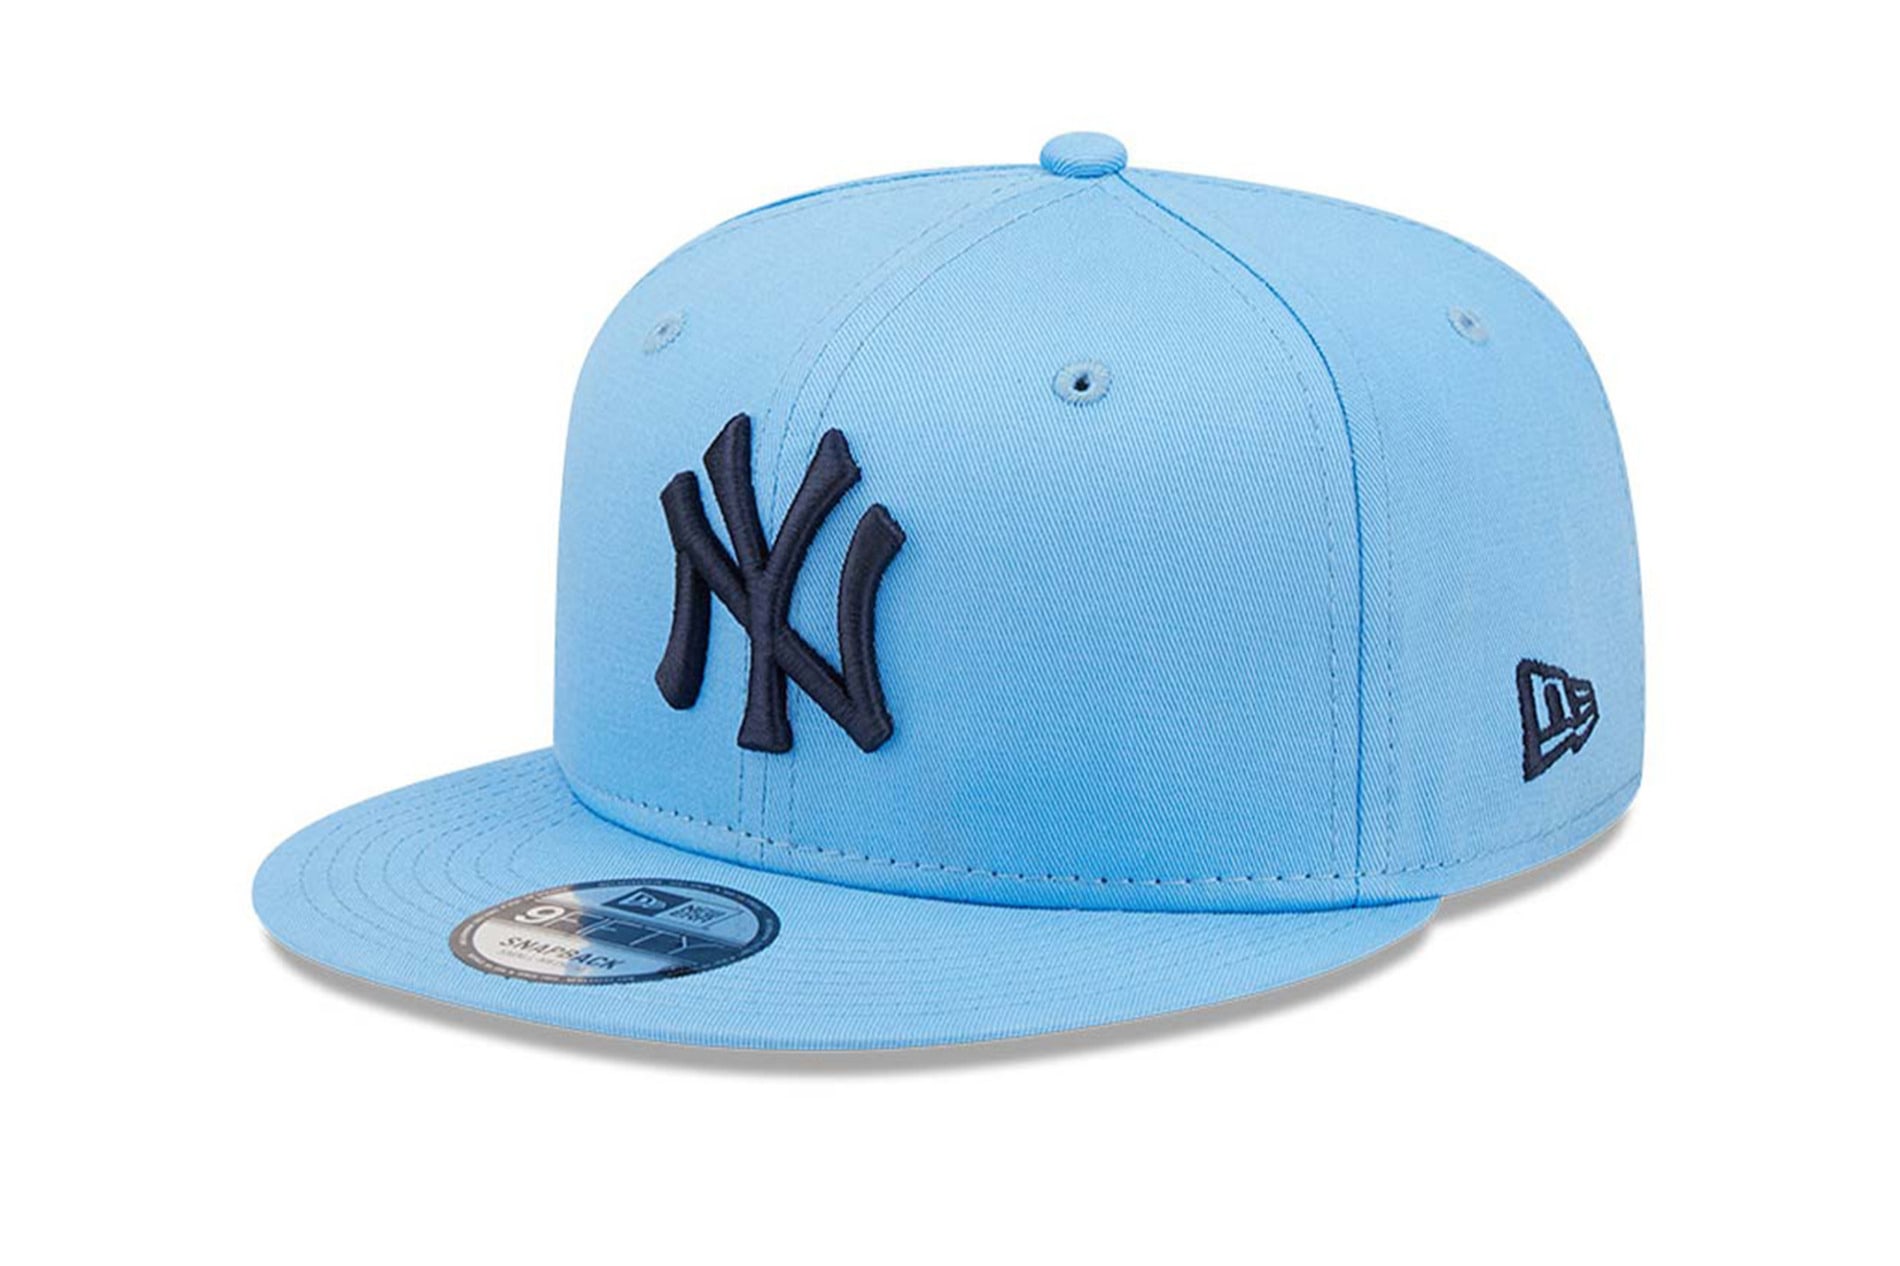 New Era New York Yankees League Essential 9FIFTY Snapback Cap